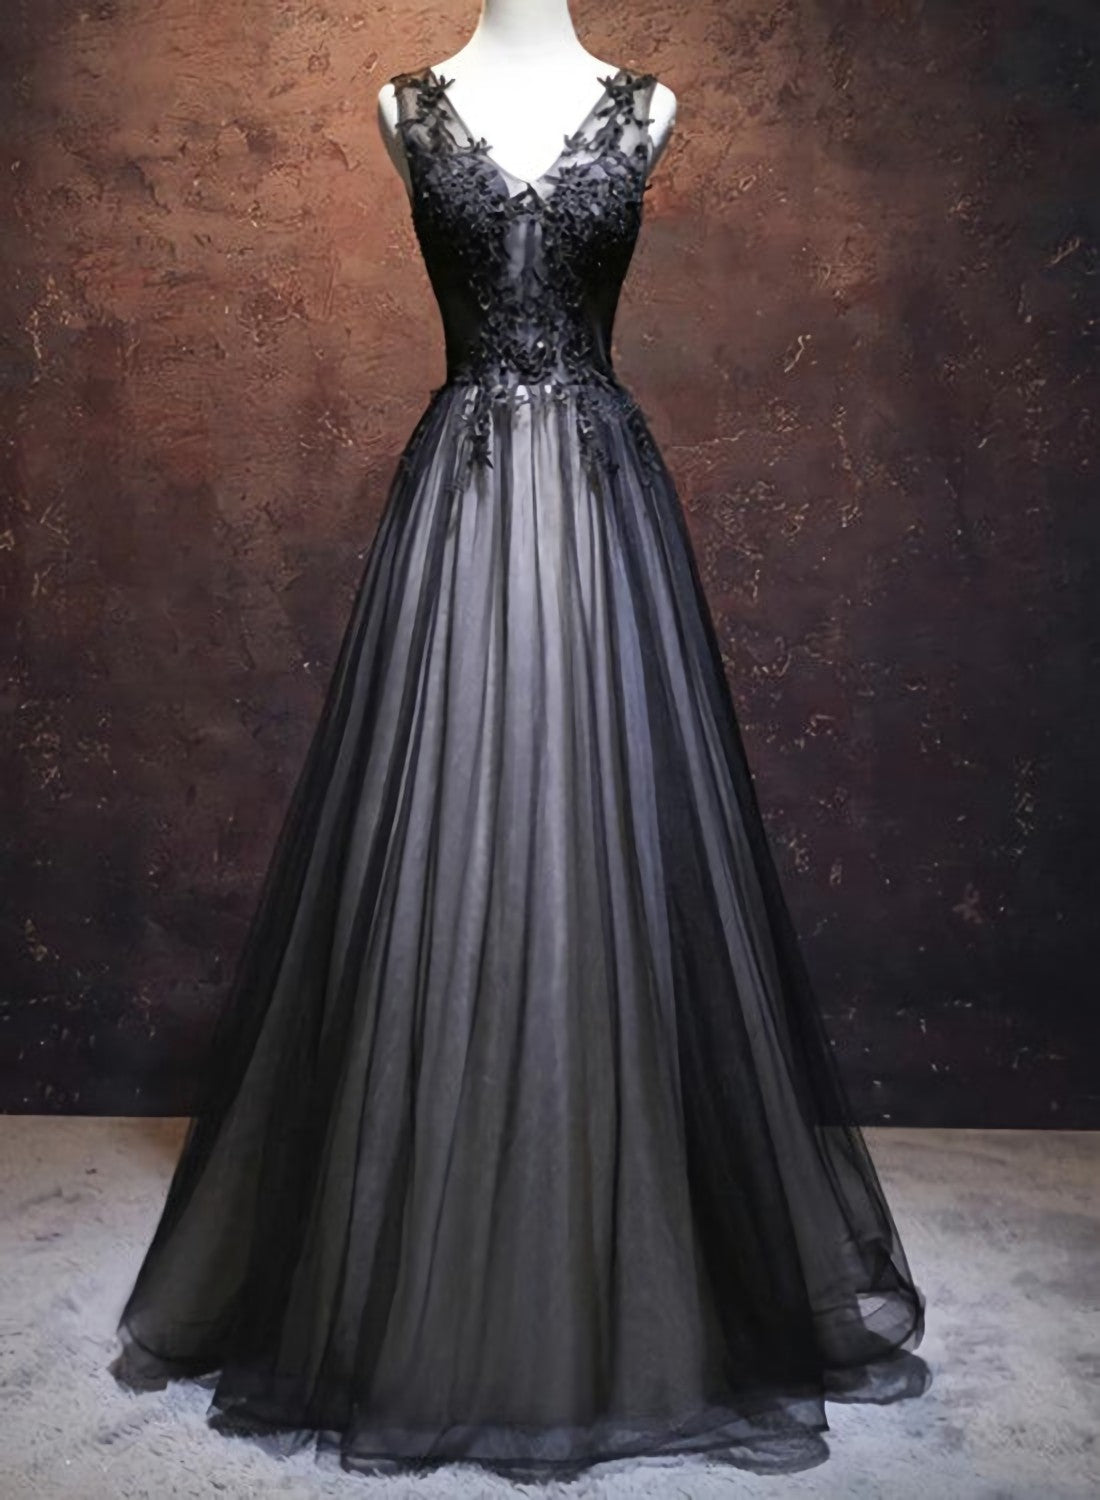 Black Corset Prom Dress, V Neckline Long Black Party Dresses, Black Evening Dresses outfit, Graduation Outfit